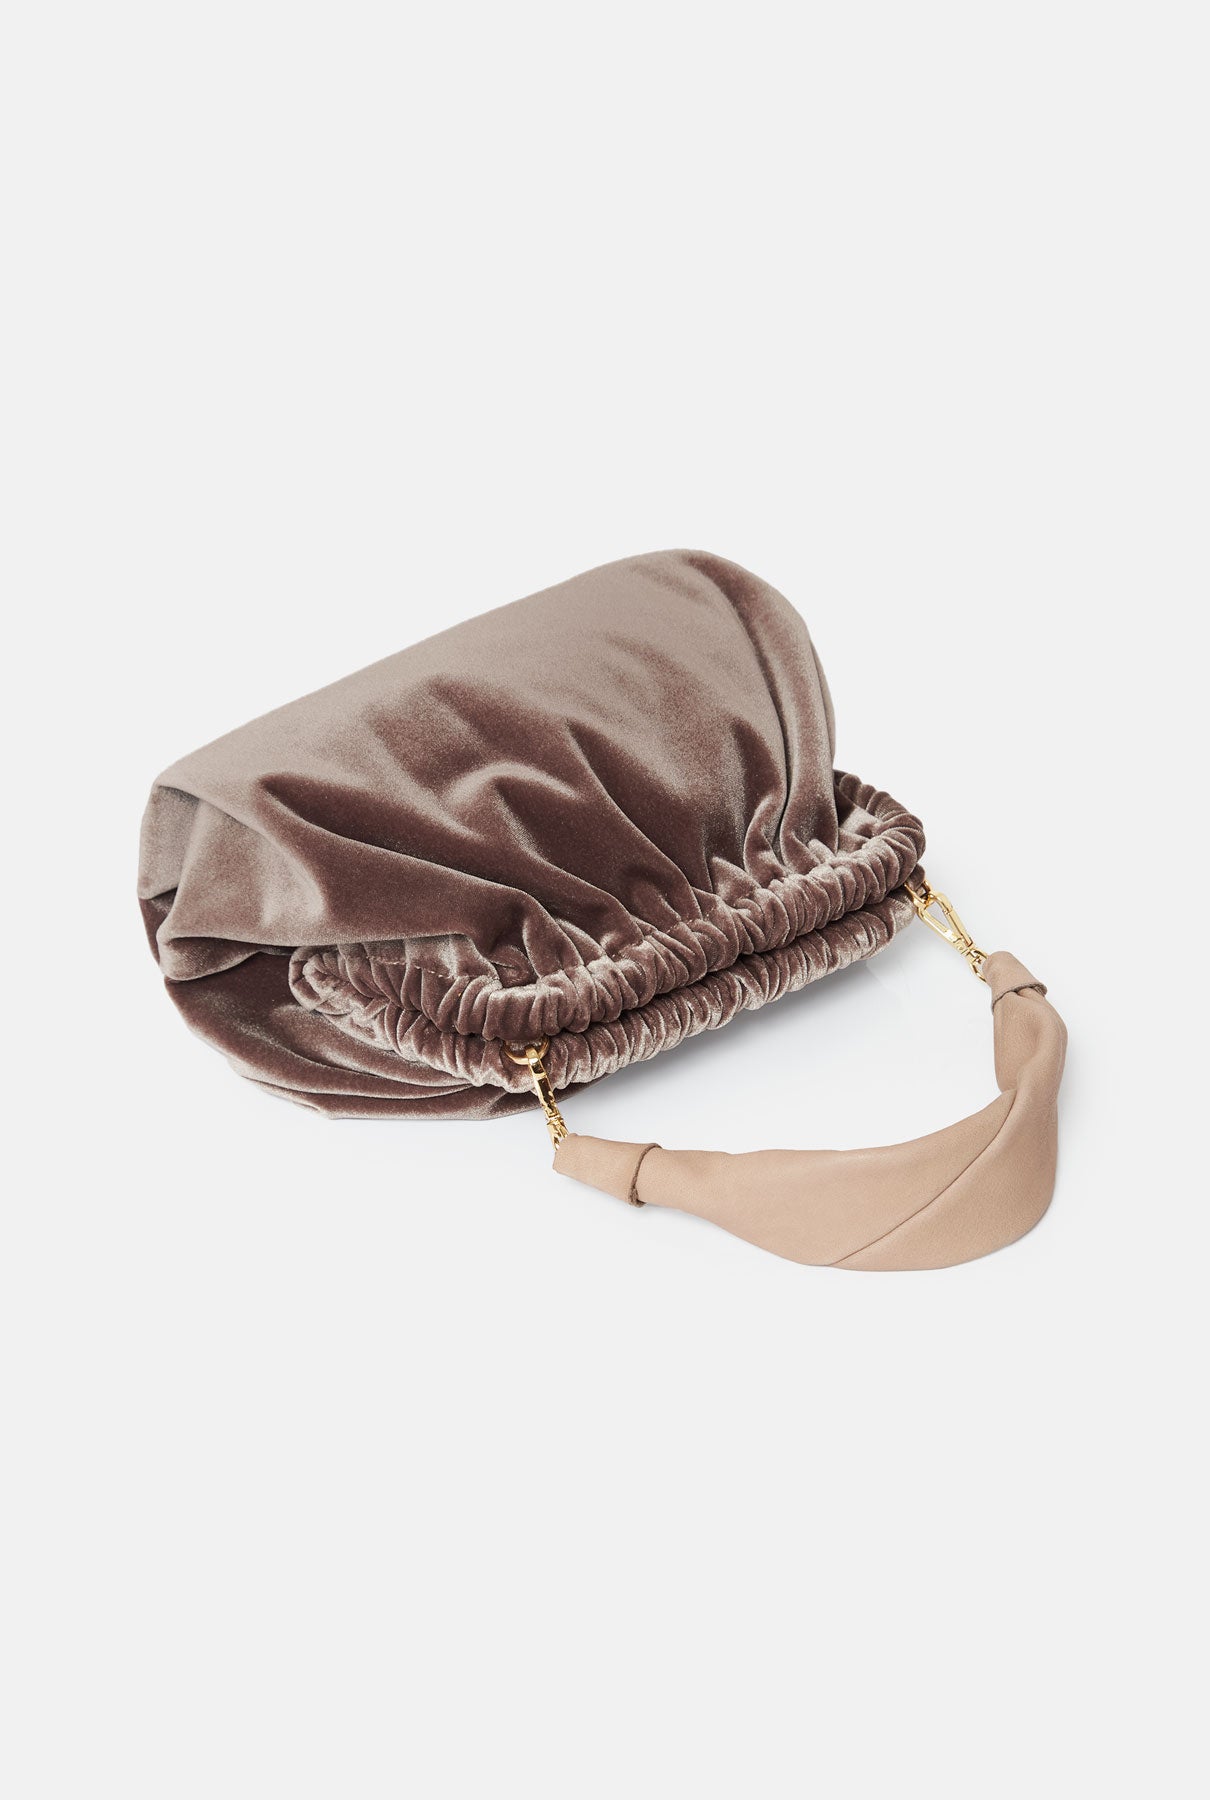 The Zumaia bag new velvet topo Mini bags The Bag Lab 